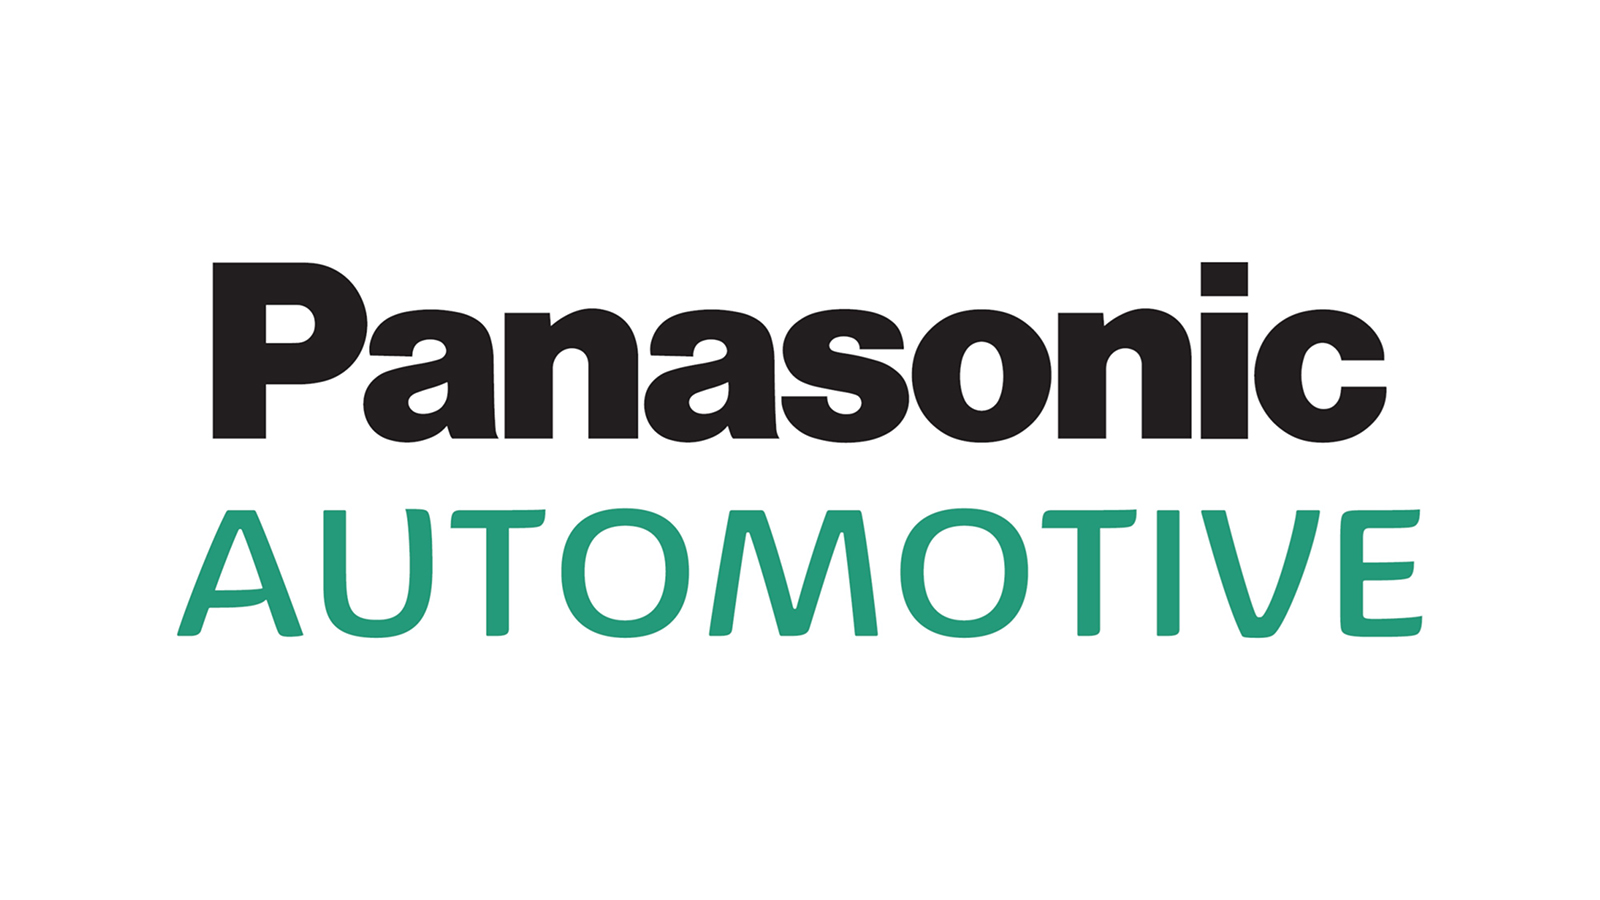 Panasonic AUTOMOTIVE ロゴ